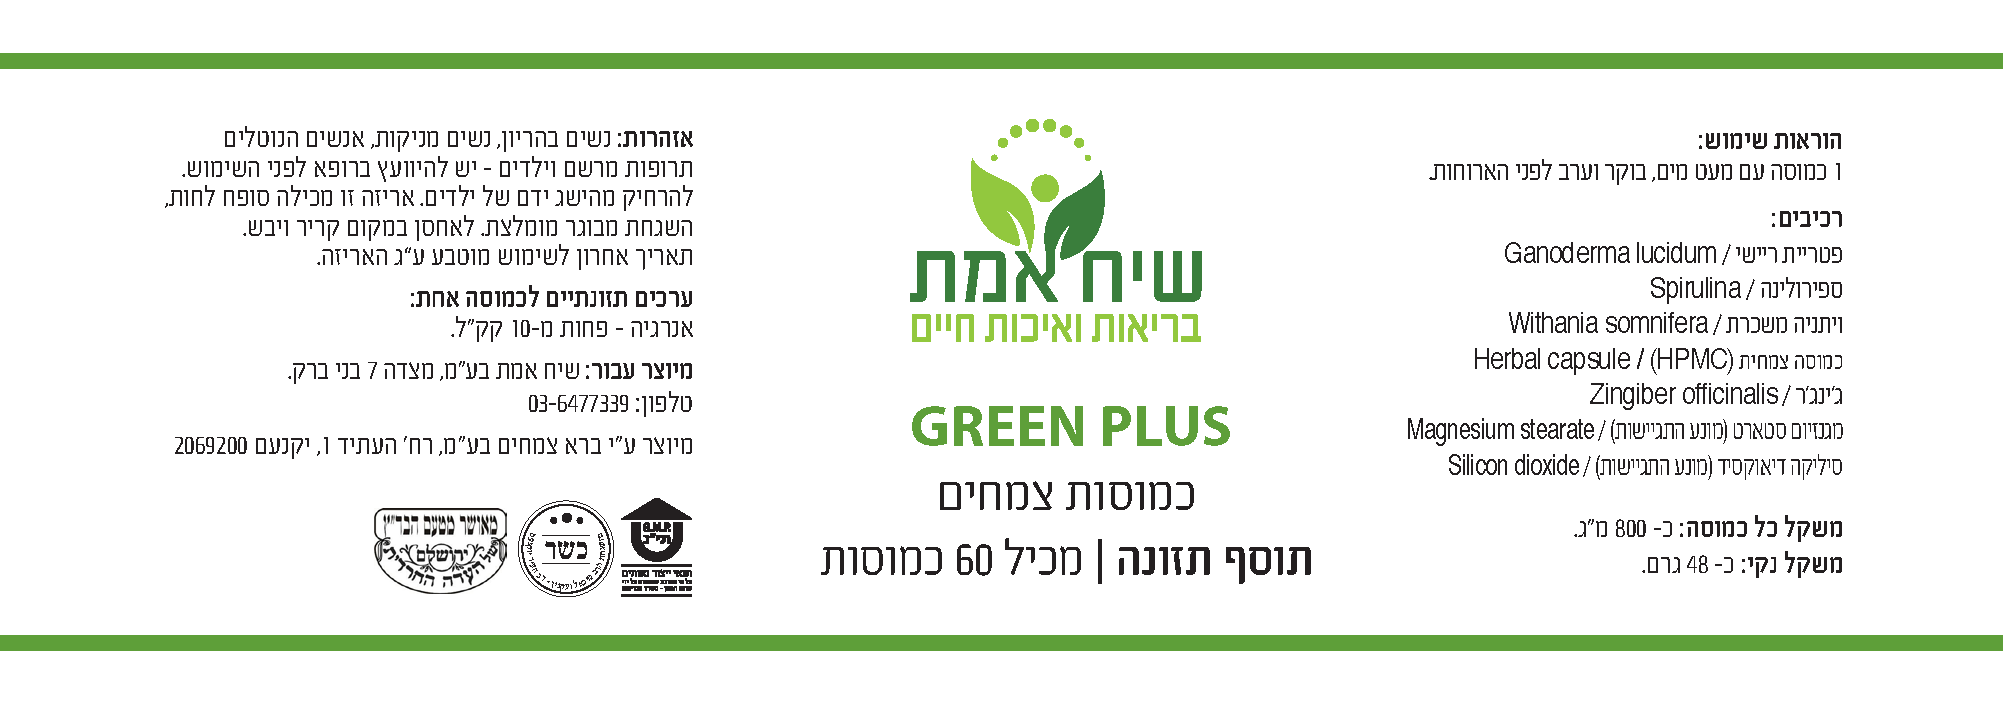 Green Plus Label